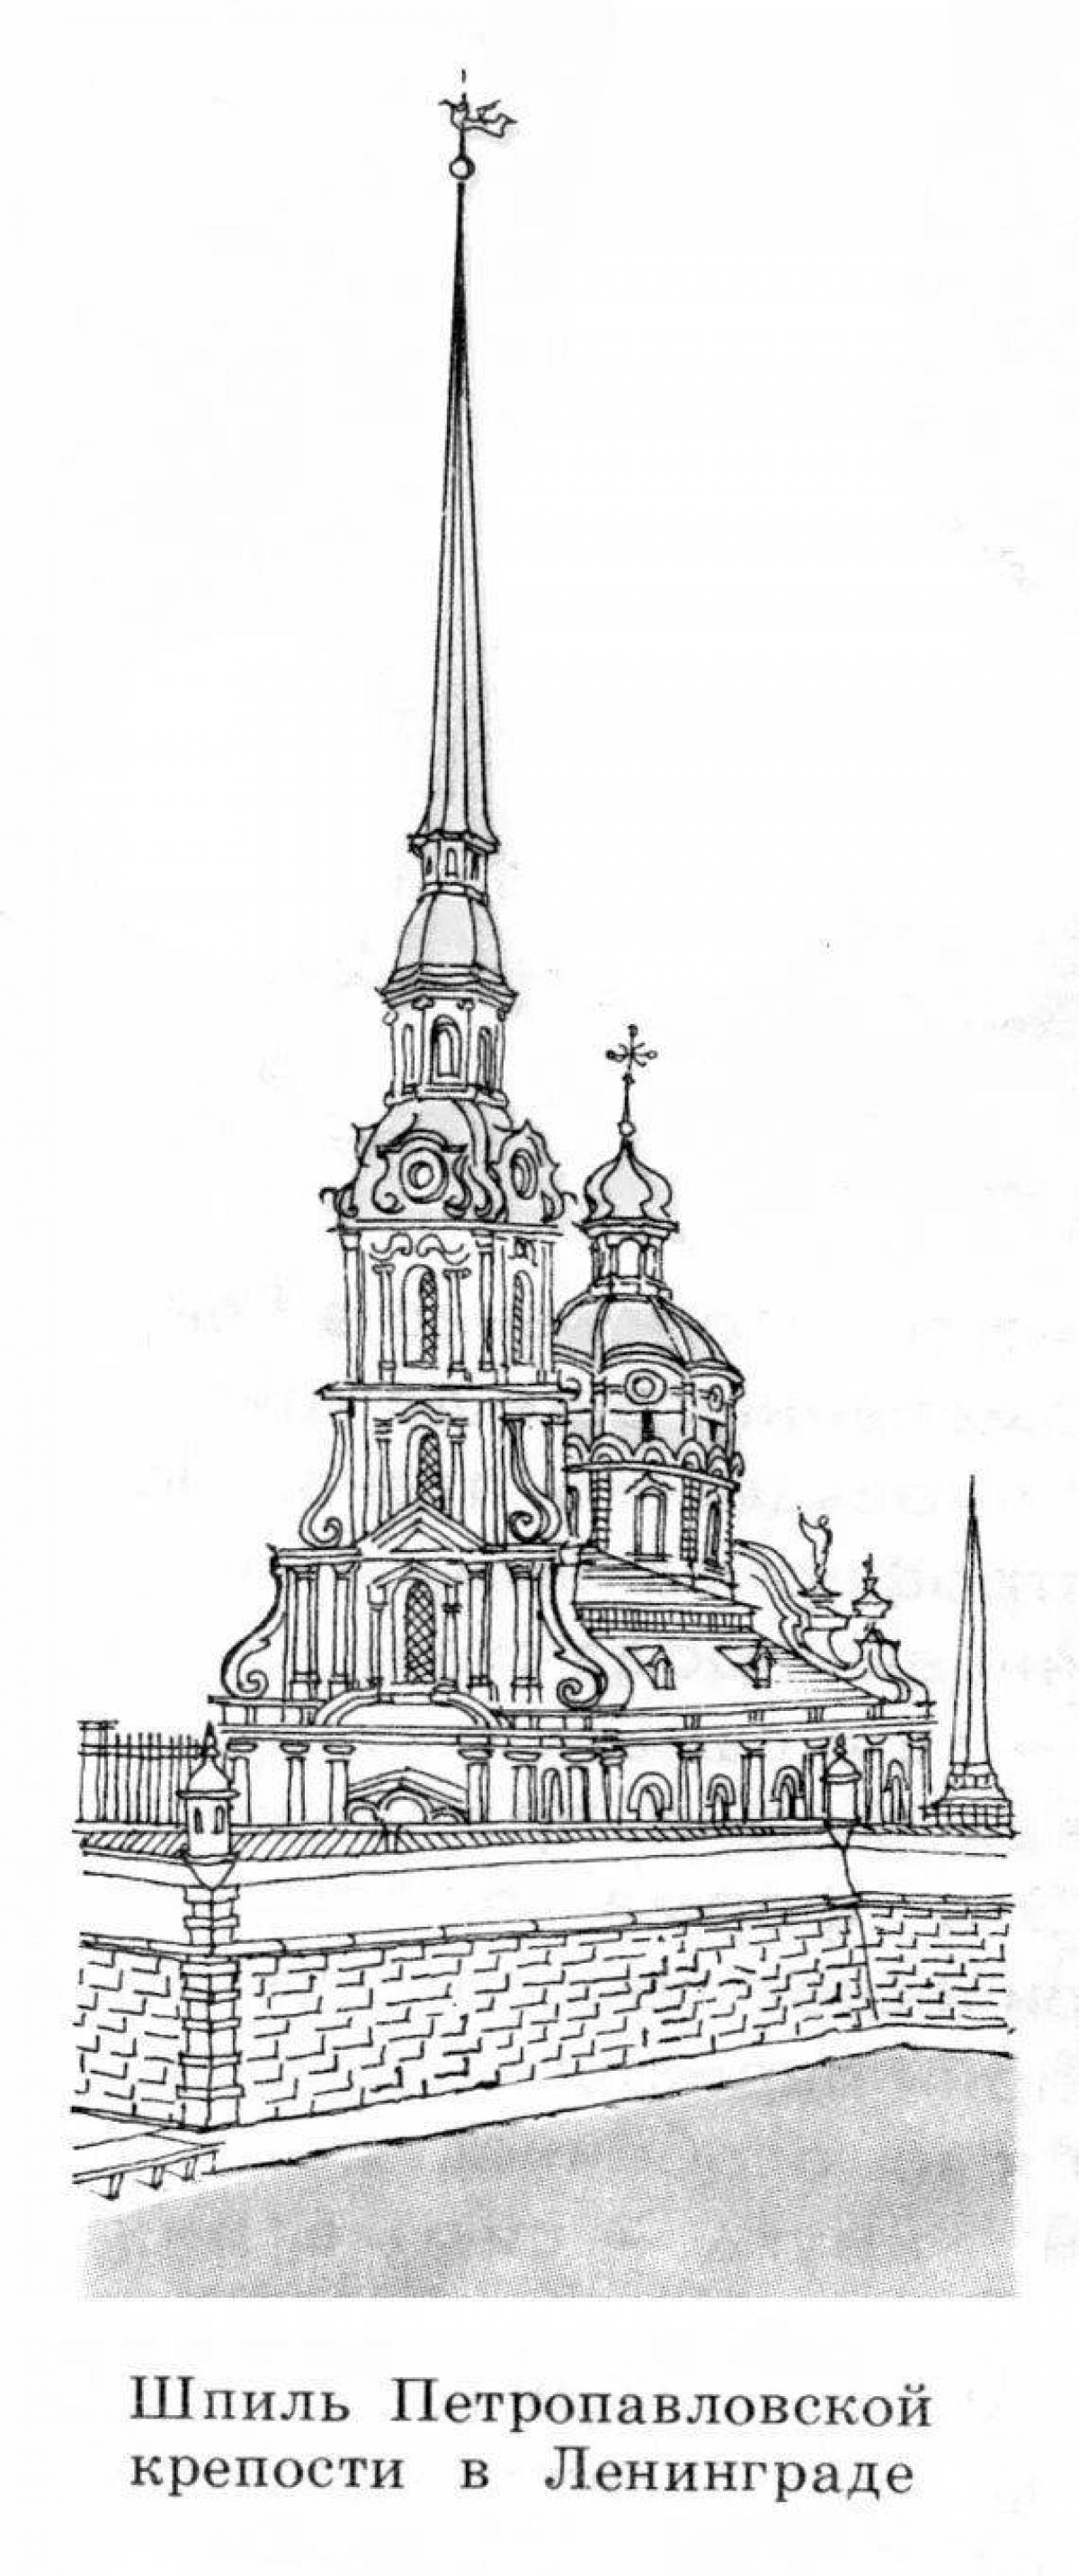 Петропавловский собор Санкт-Петербург чертежи